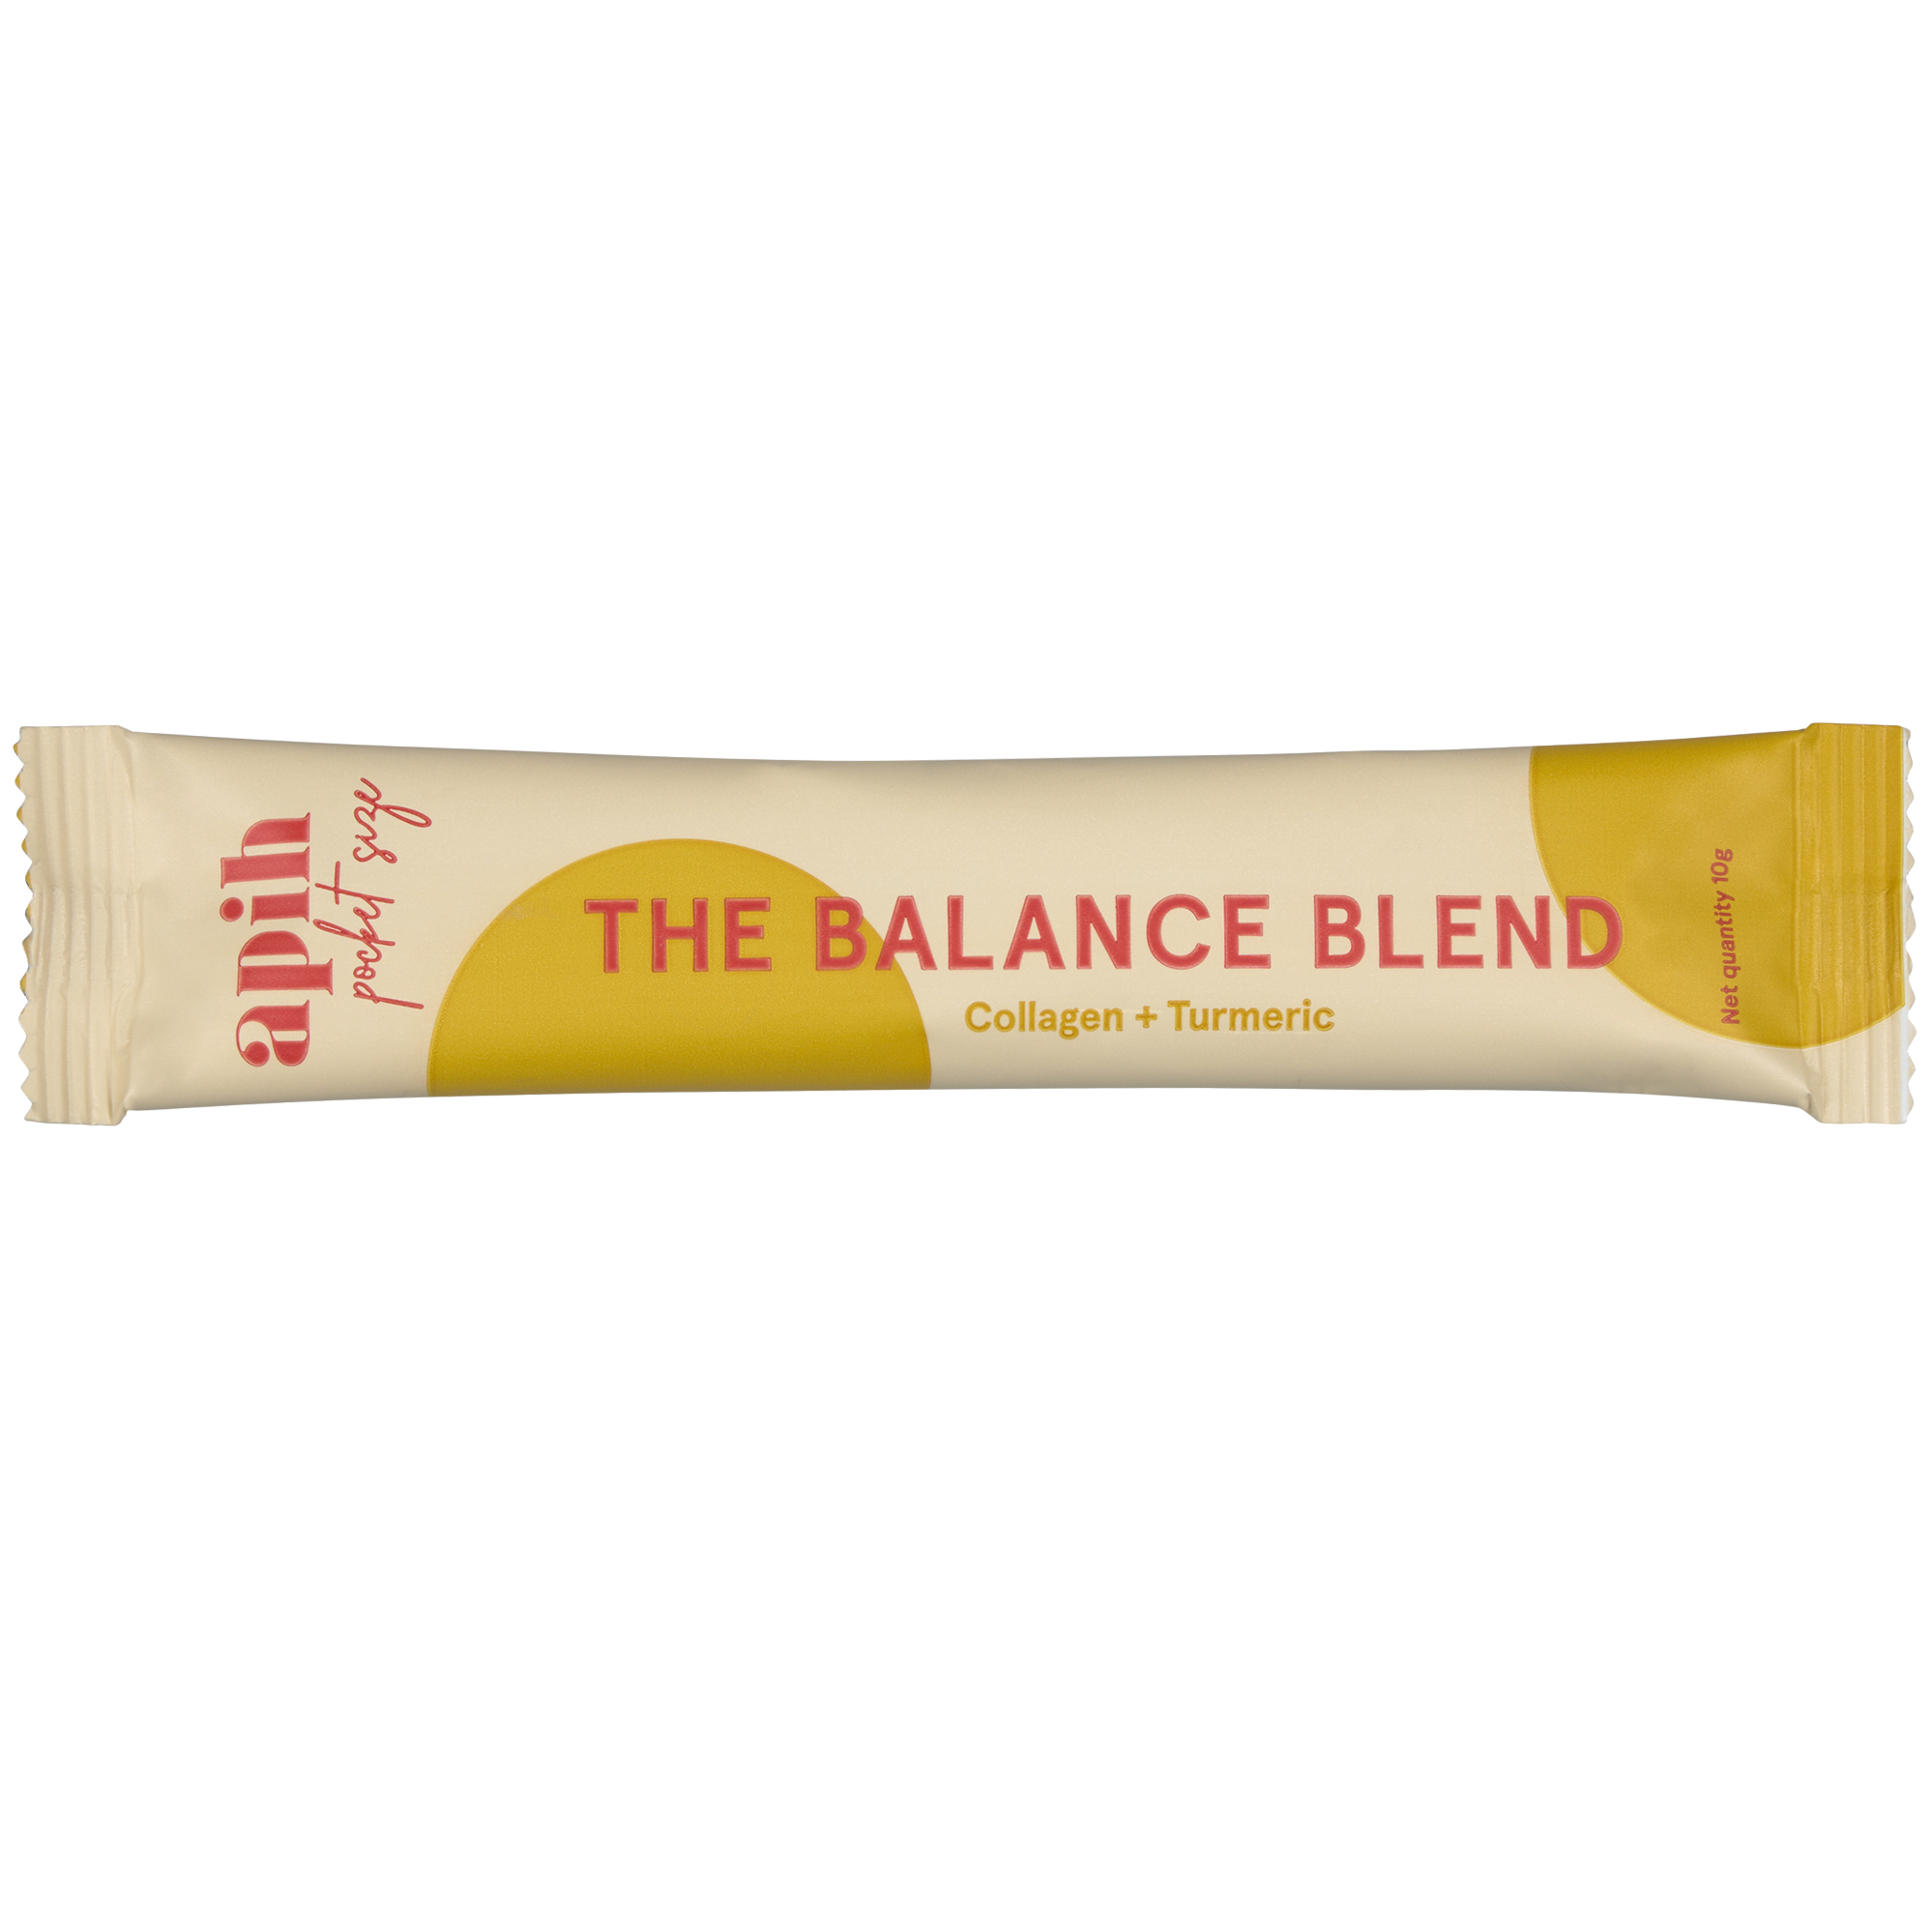 The Balance Blend  Pocket size